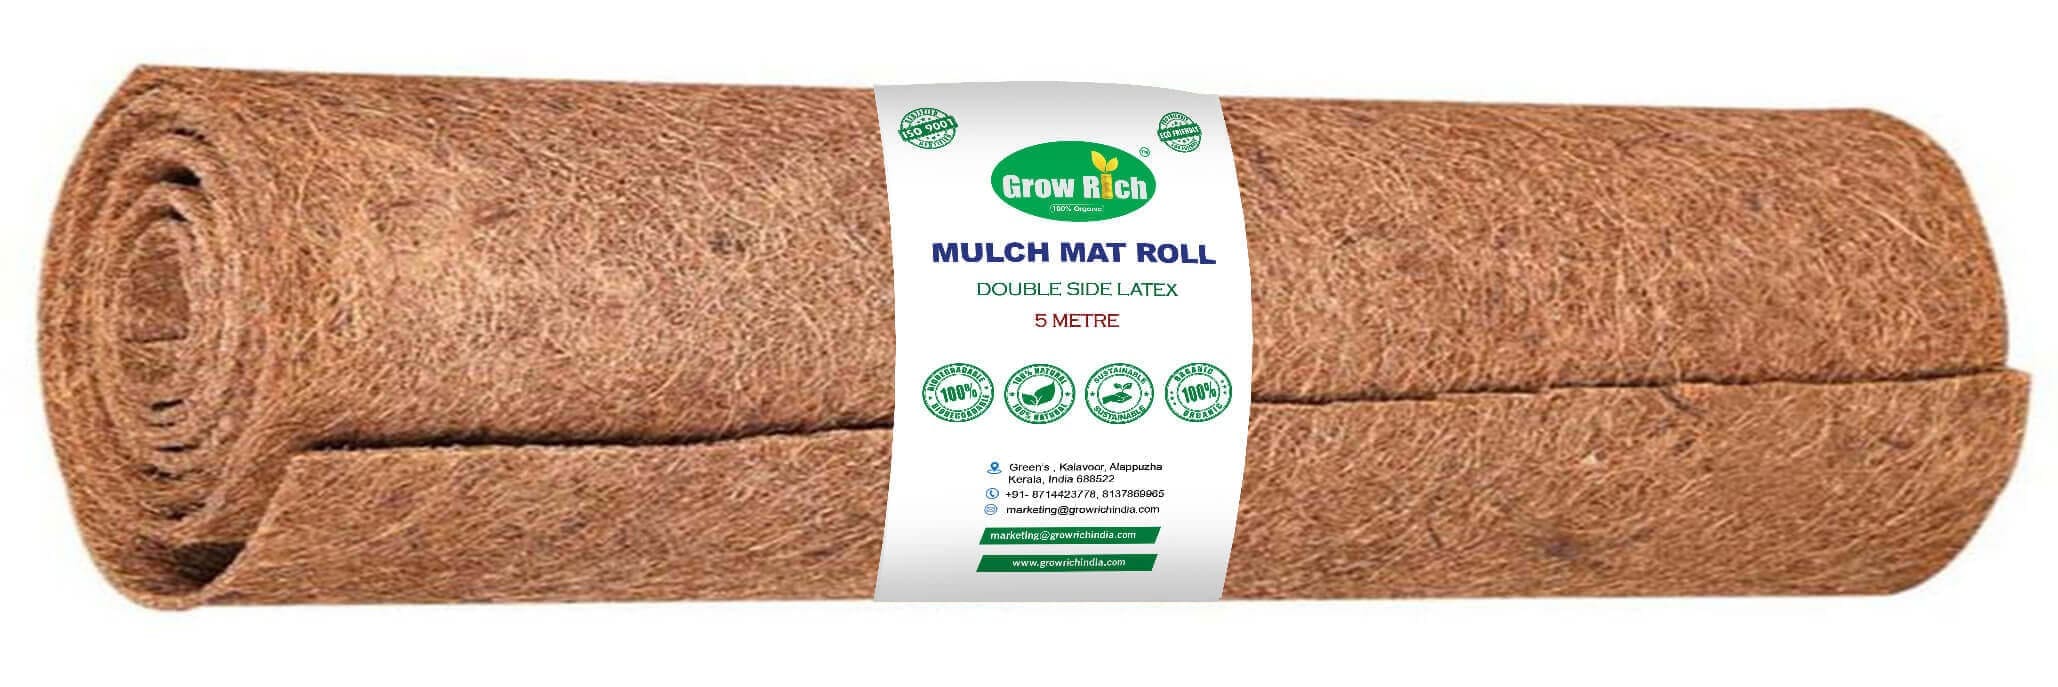 Grow Rich Mulch Mat Roll Double Side Latex 5m 